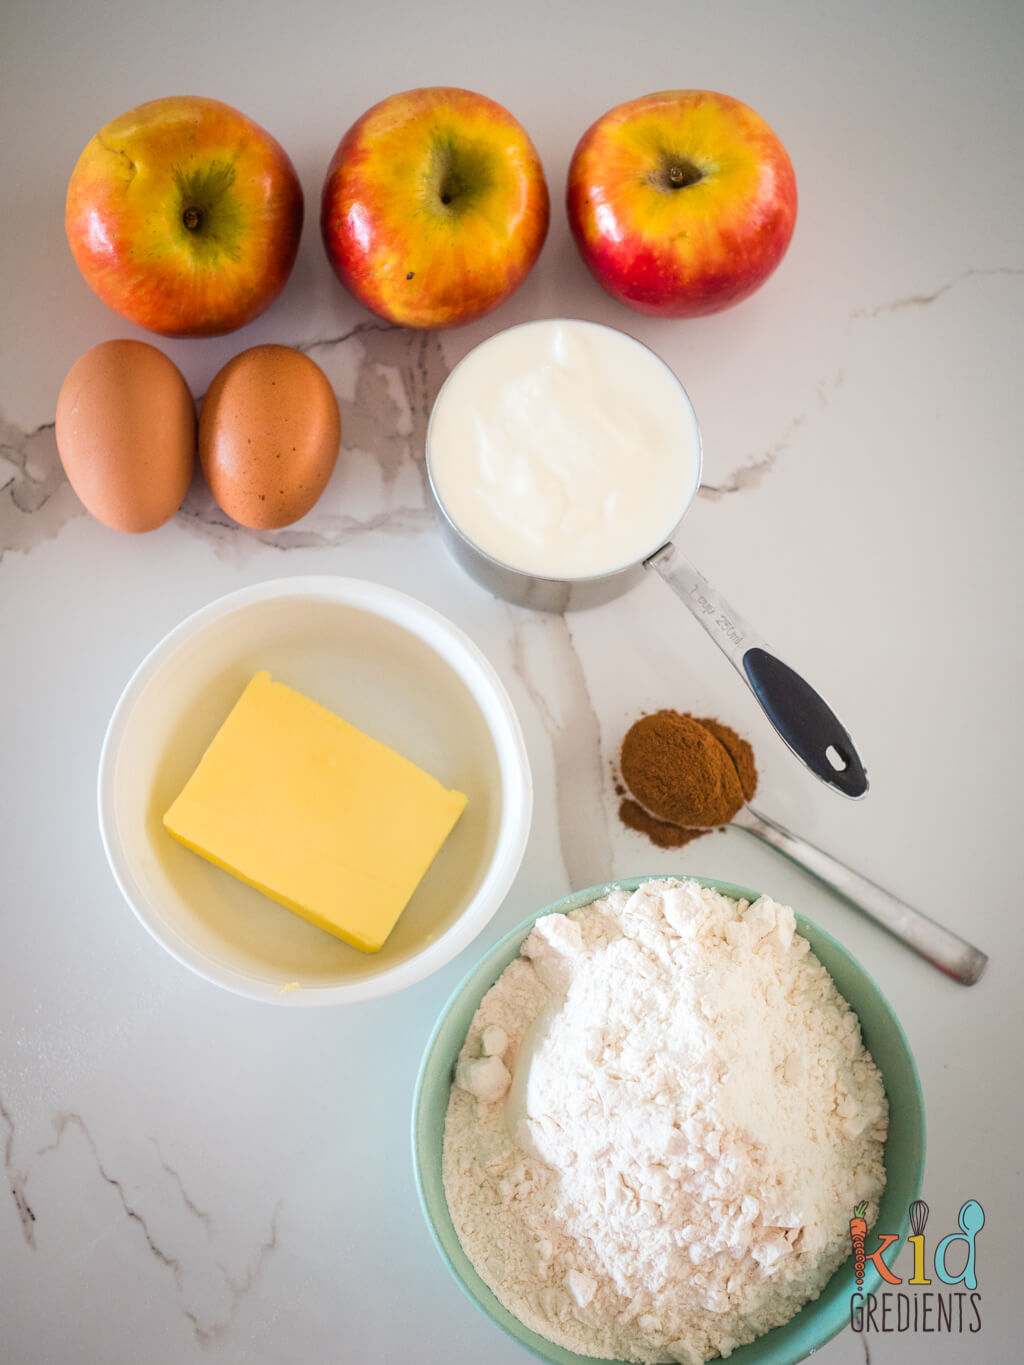 ingredients: self raising flour, apples, eggs, butter, cinnamon and yoghurt